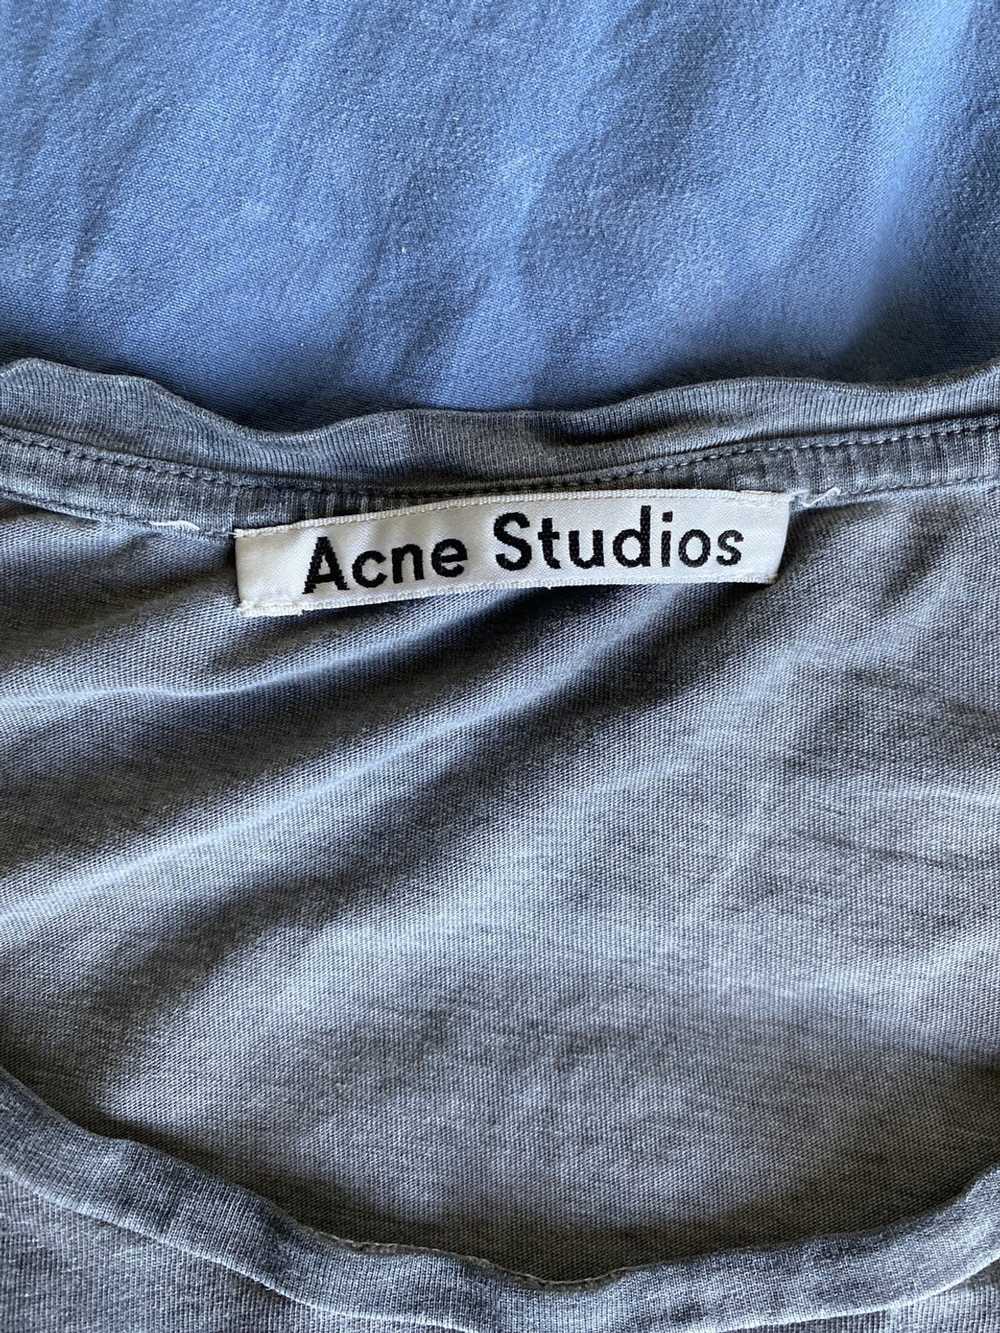 Acne Studios Acne Studios Logo Tee - image 2